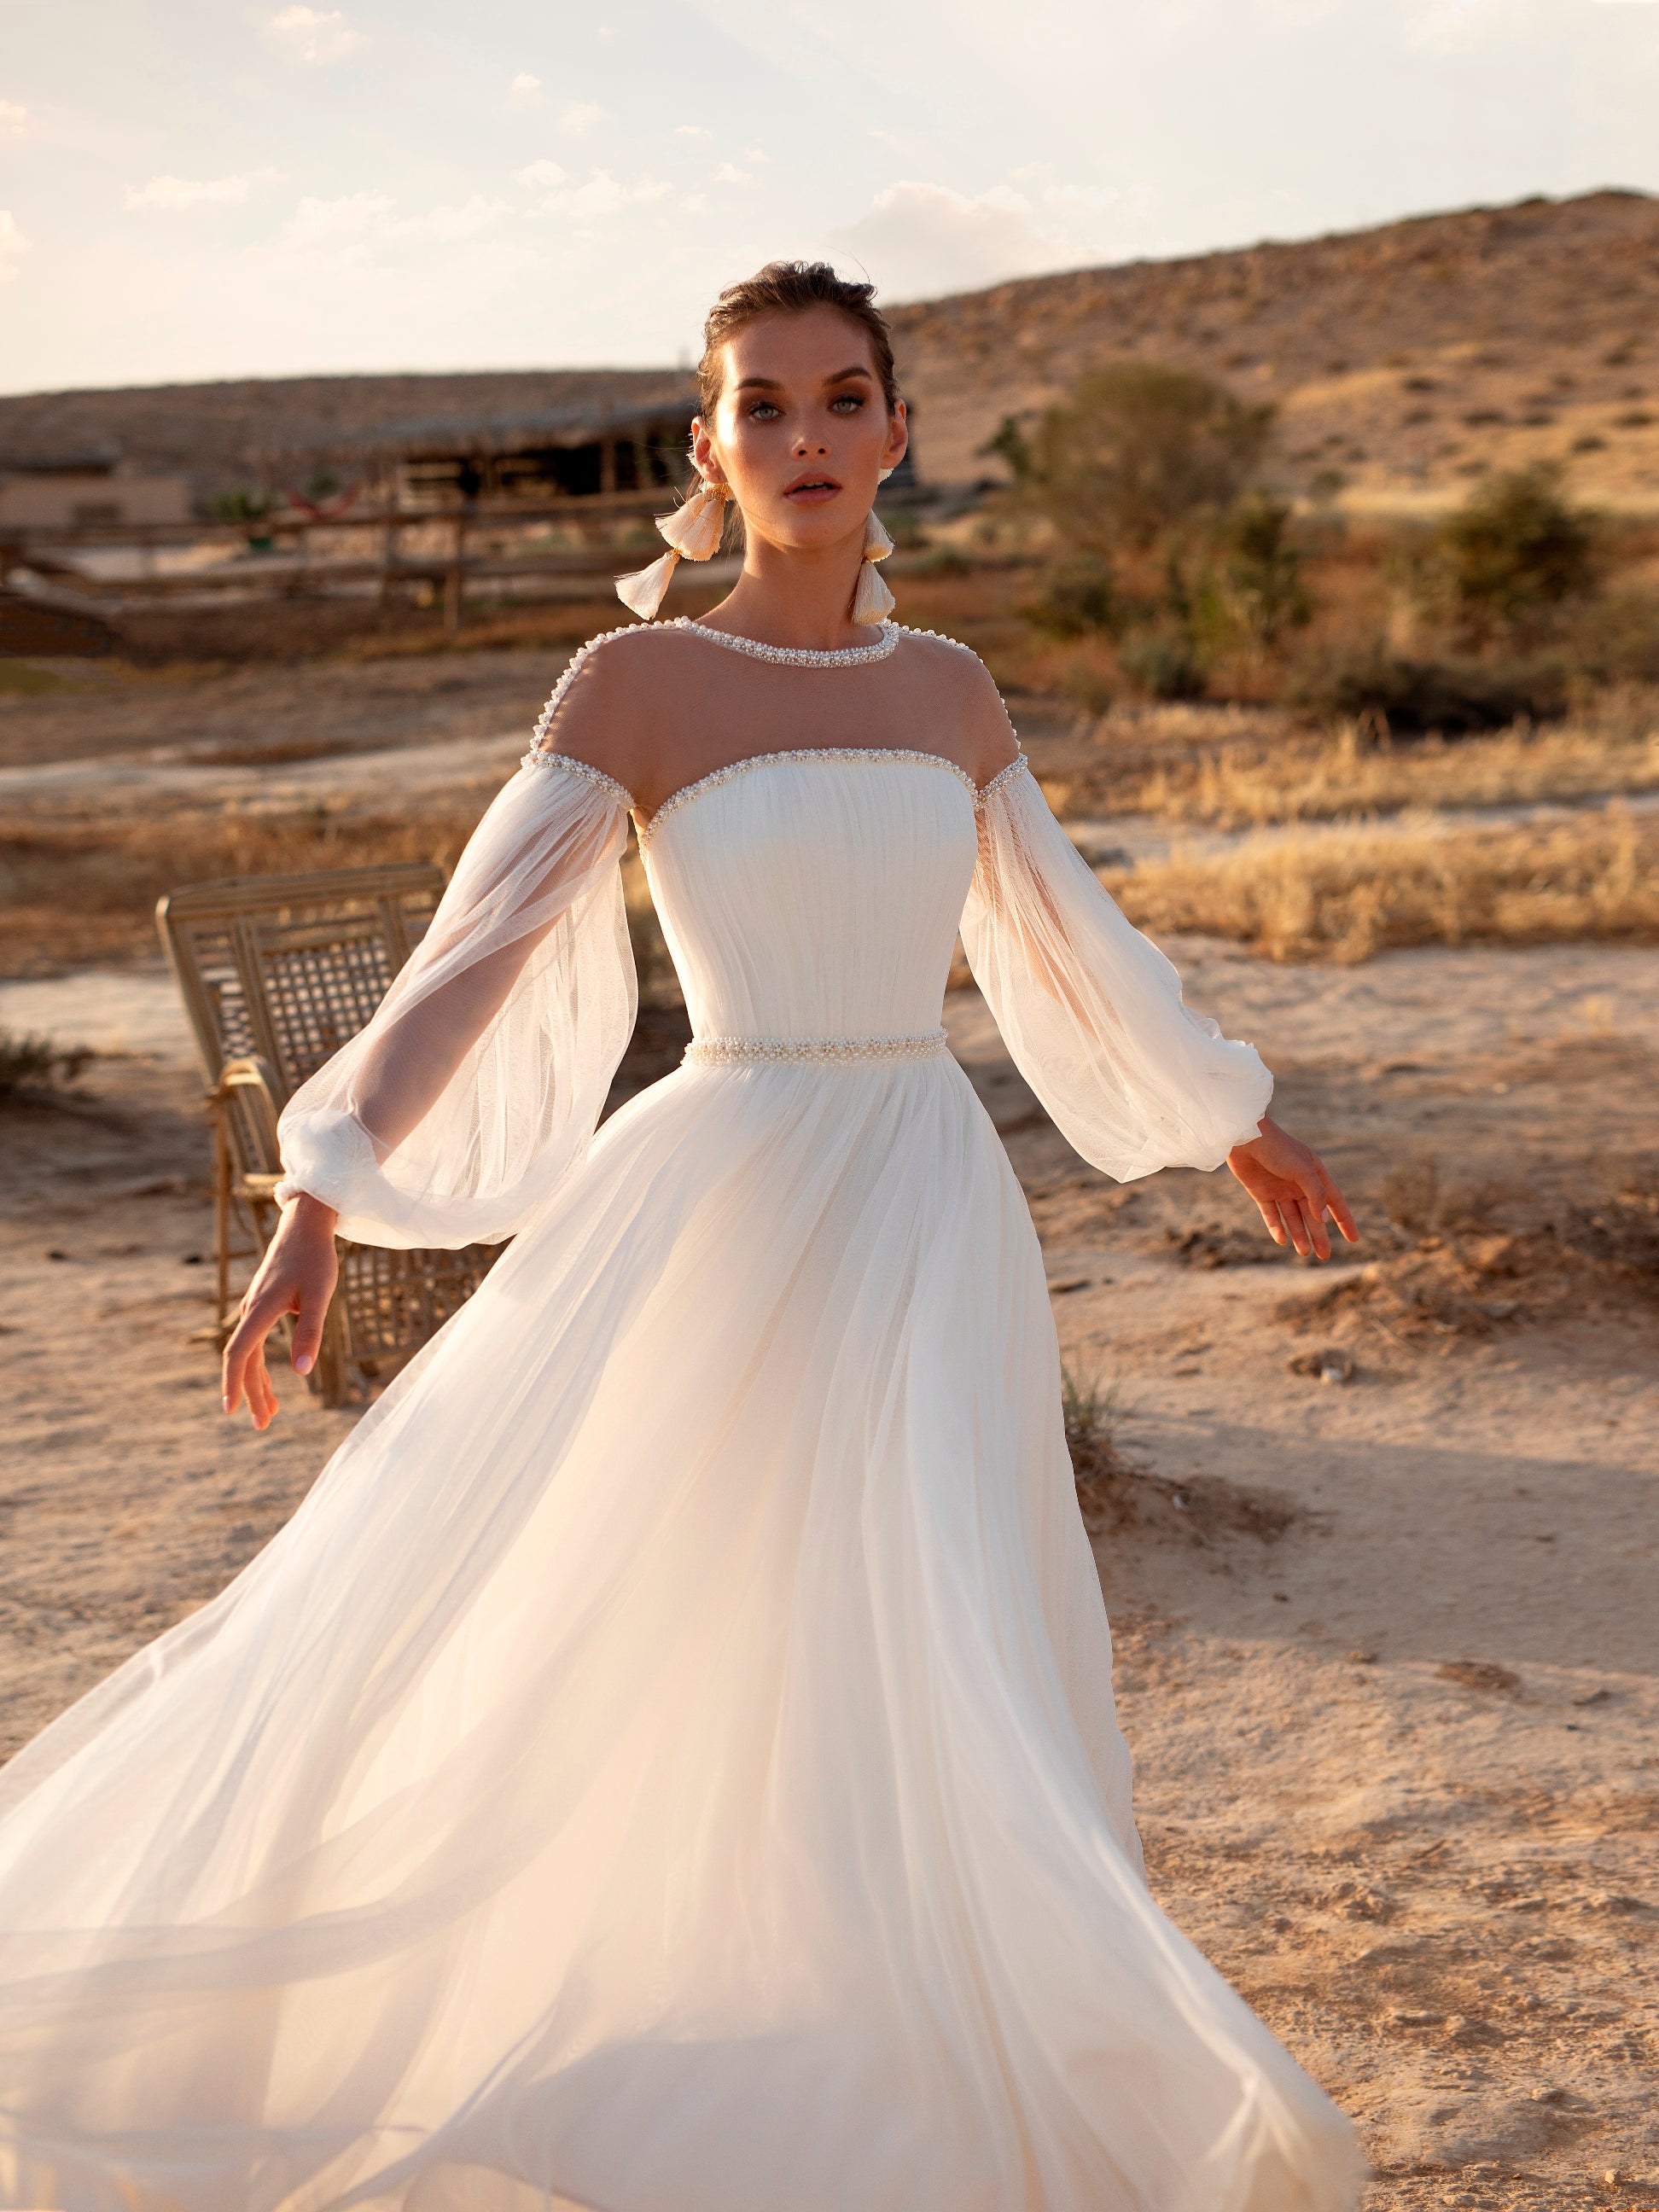 Brief History of Wedding Dresses & Gowns | DaVinci Bridal